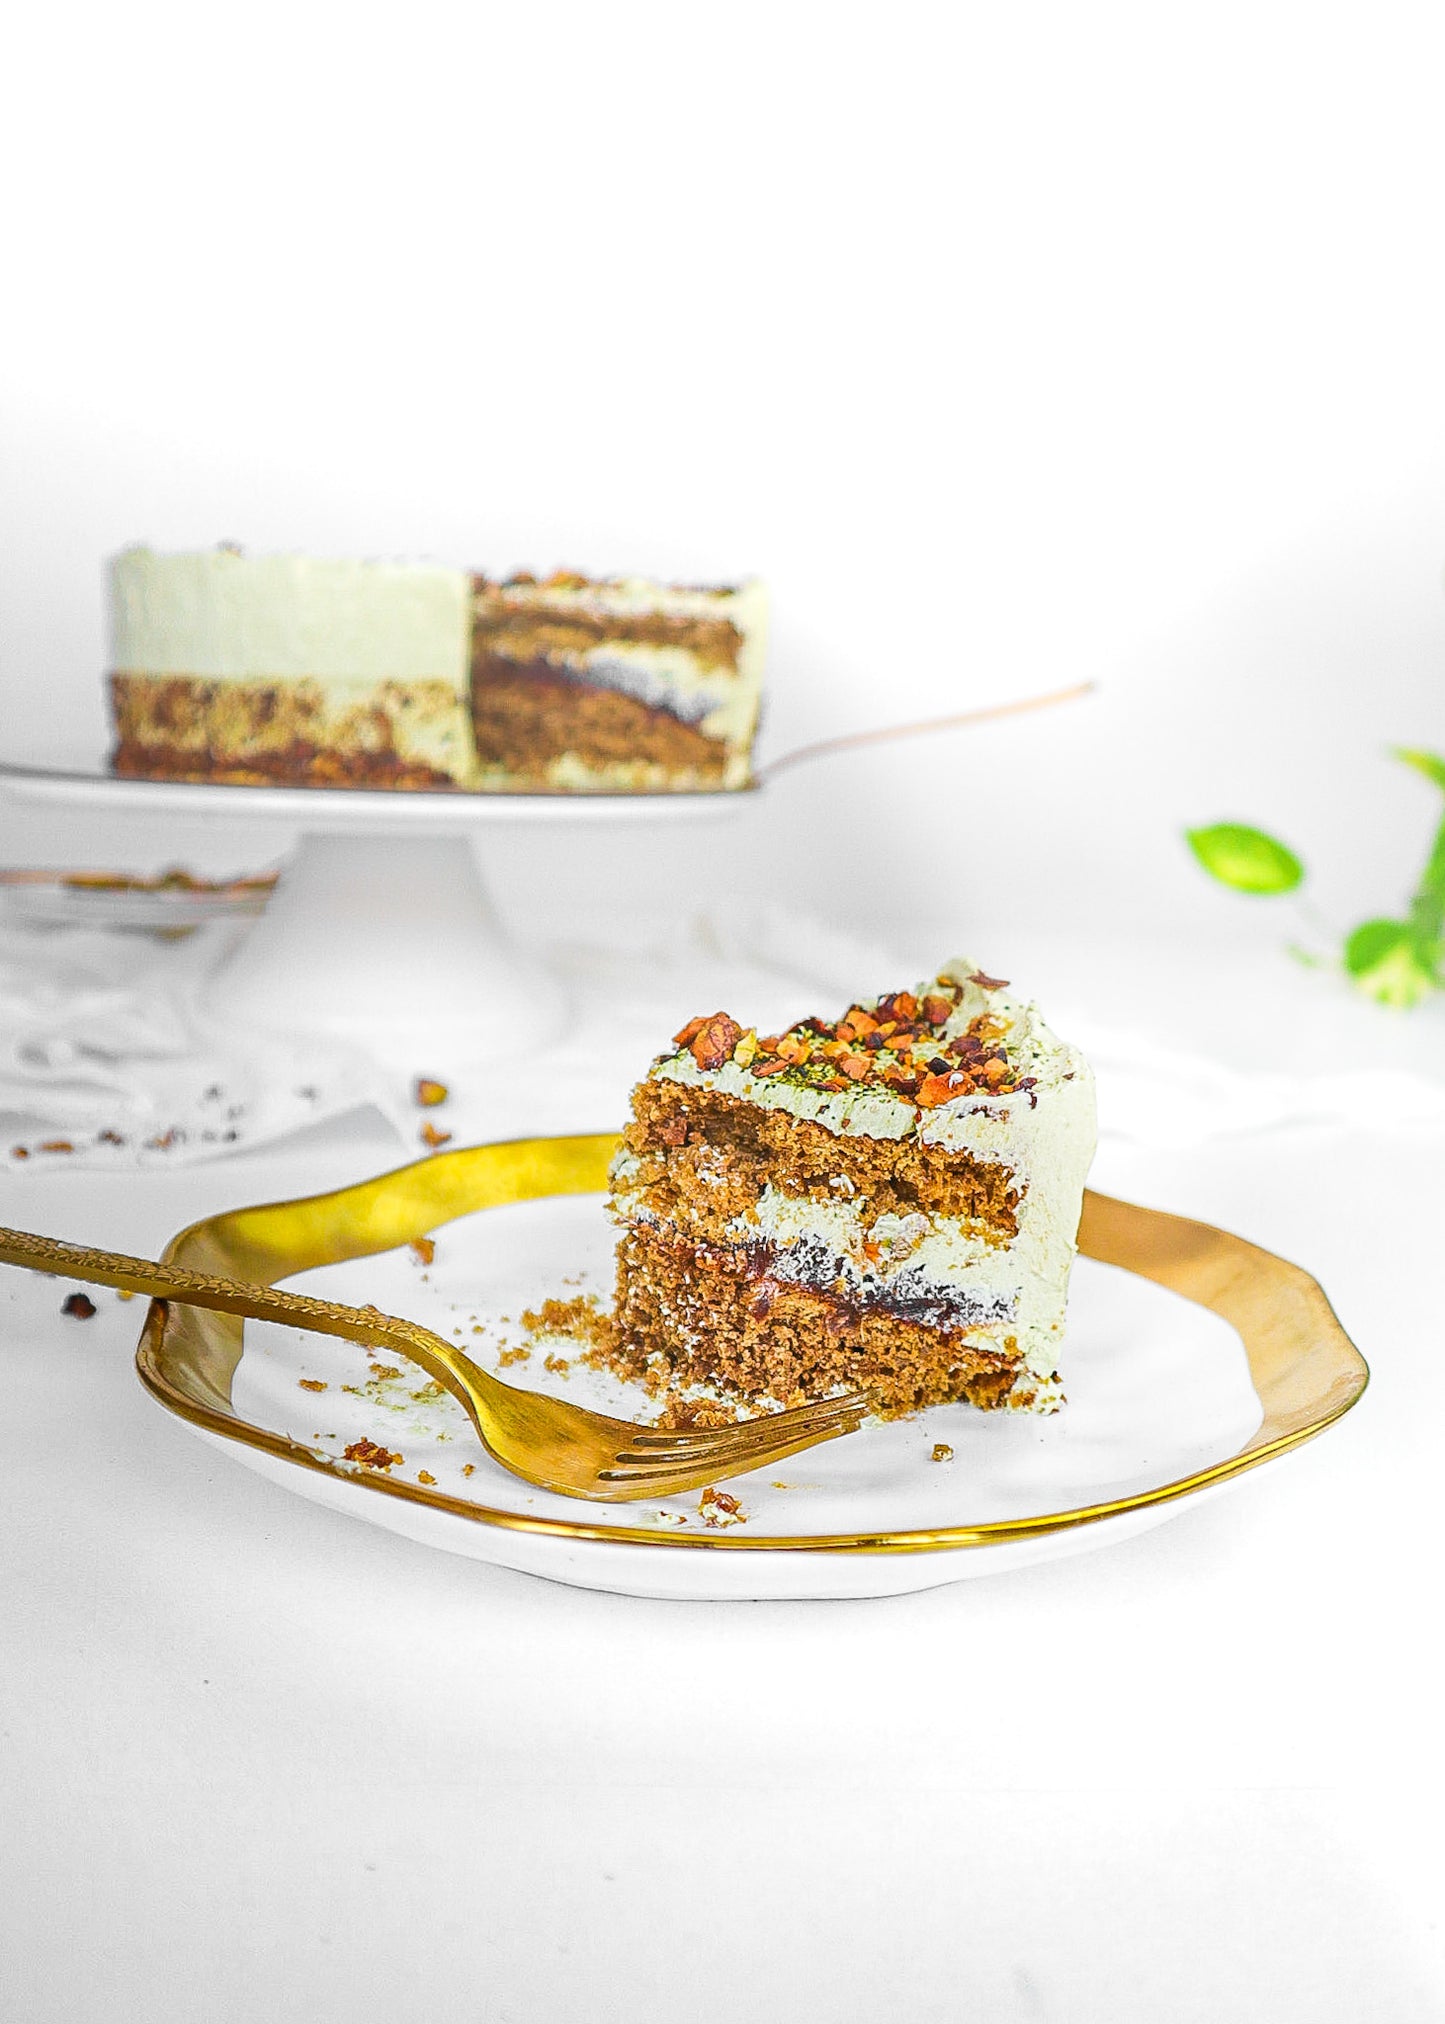 Best Seller: Matcha Pistachio Dates Caramel Cake